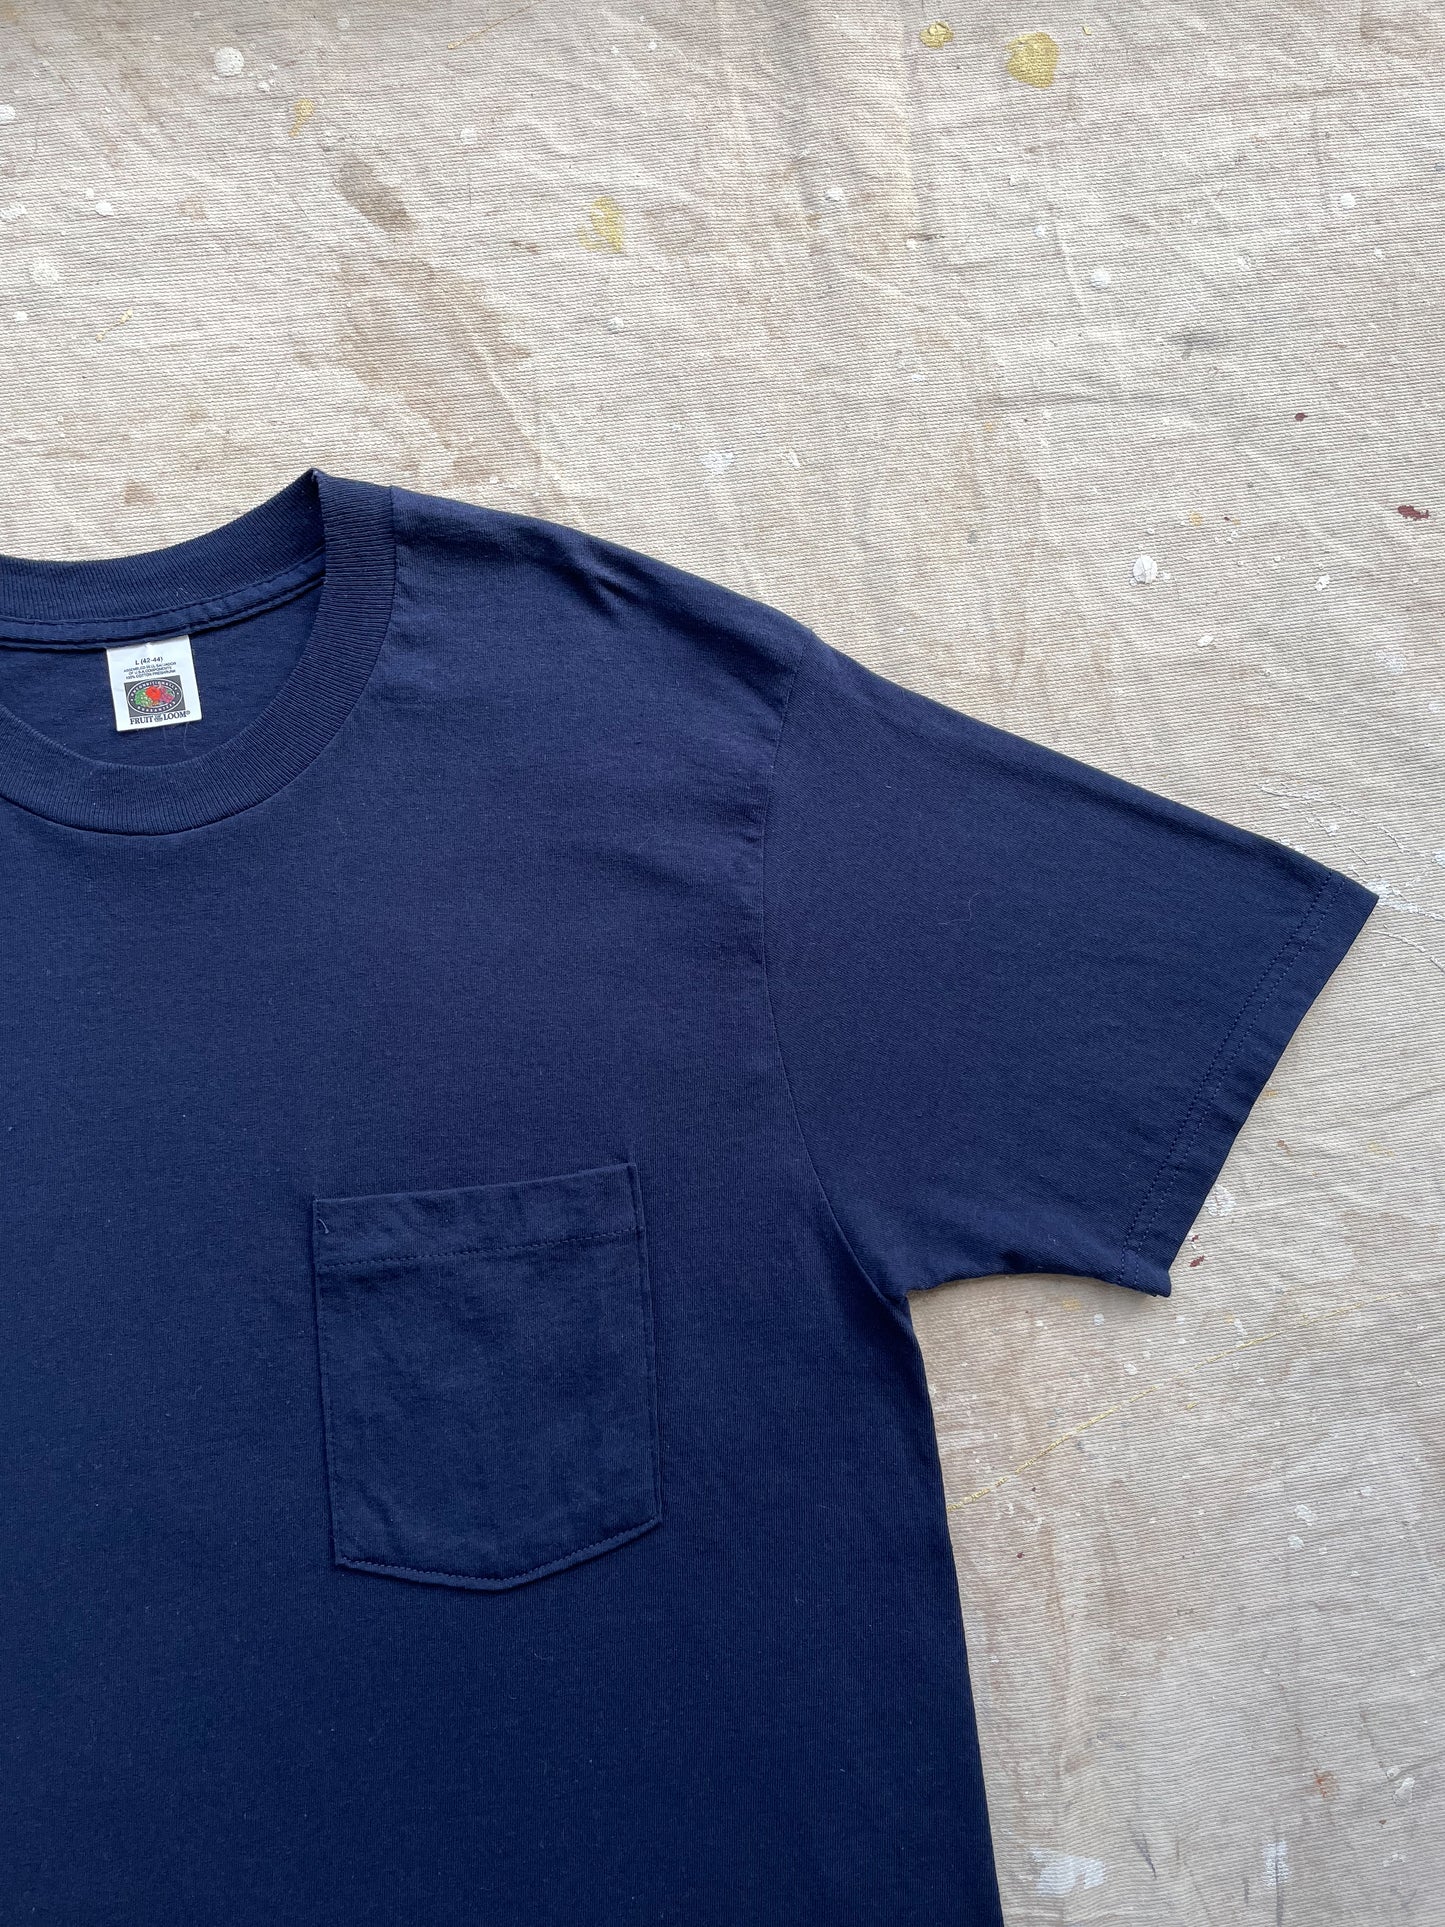 Blank Navy Pocket T-Shirt—[L]